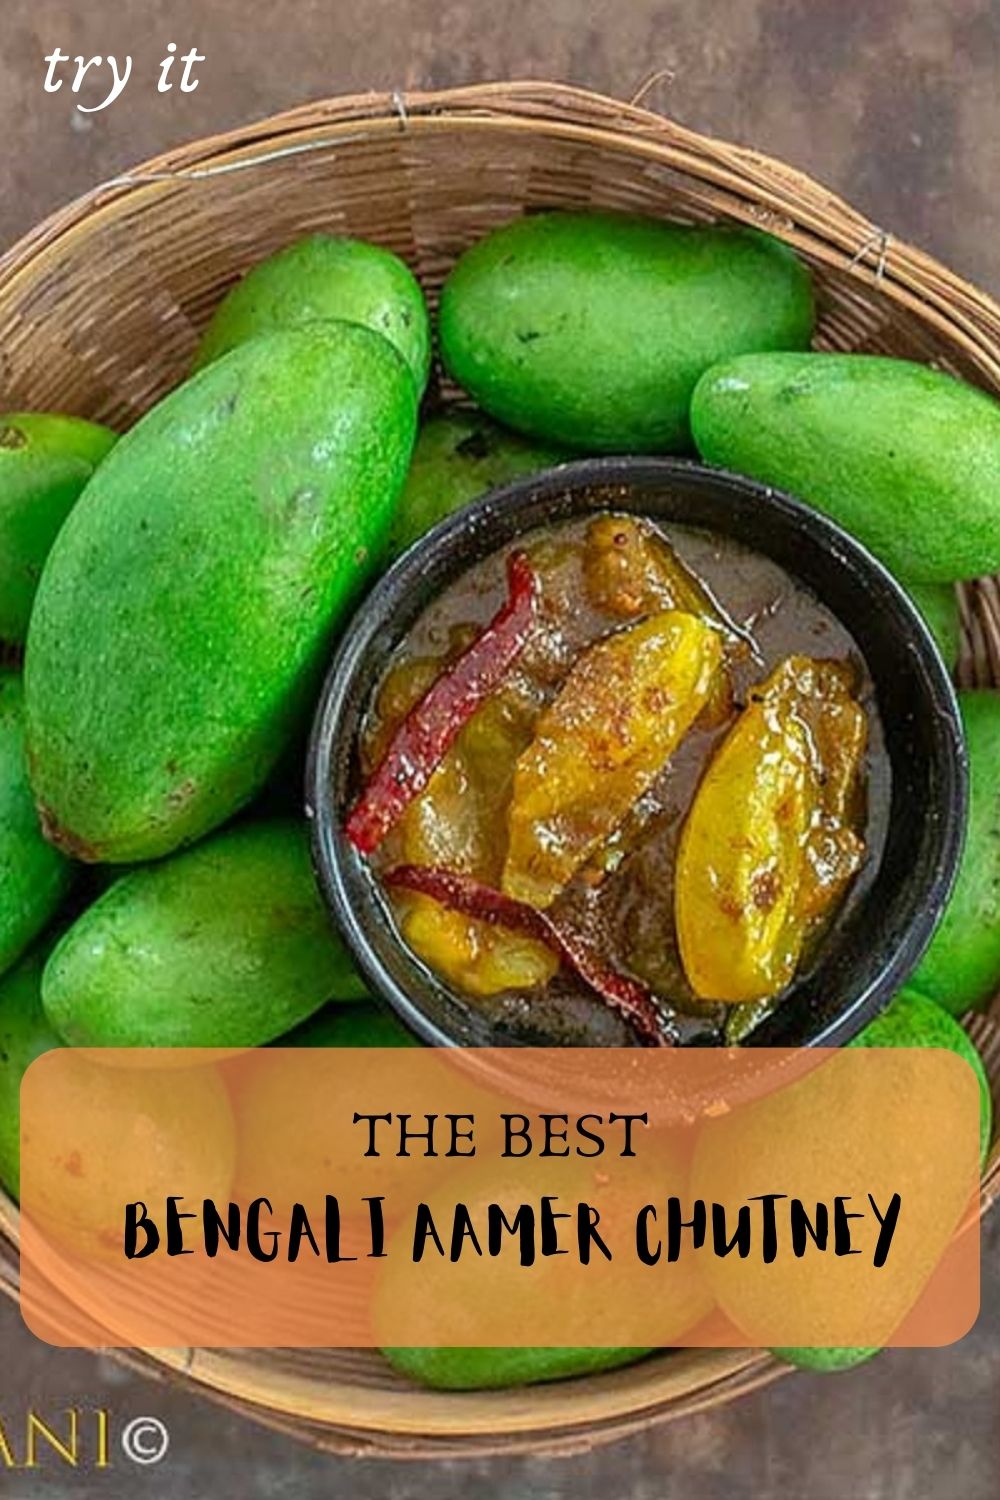 %Bengali aamer Chutney recipe pinterest pin